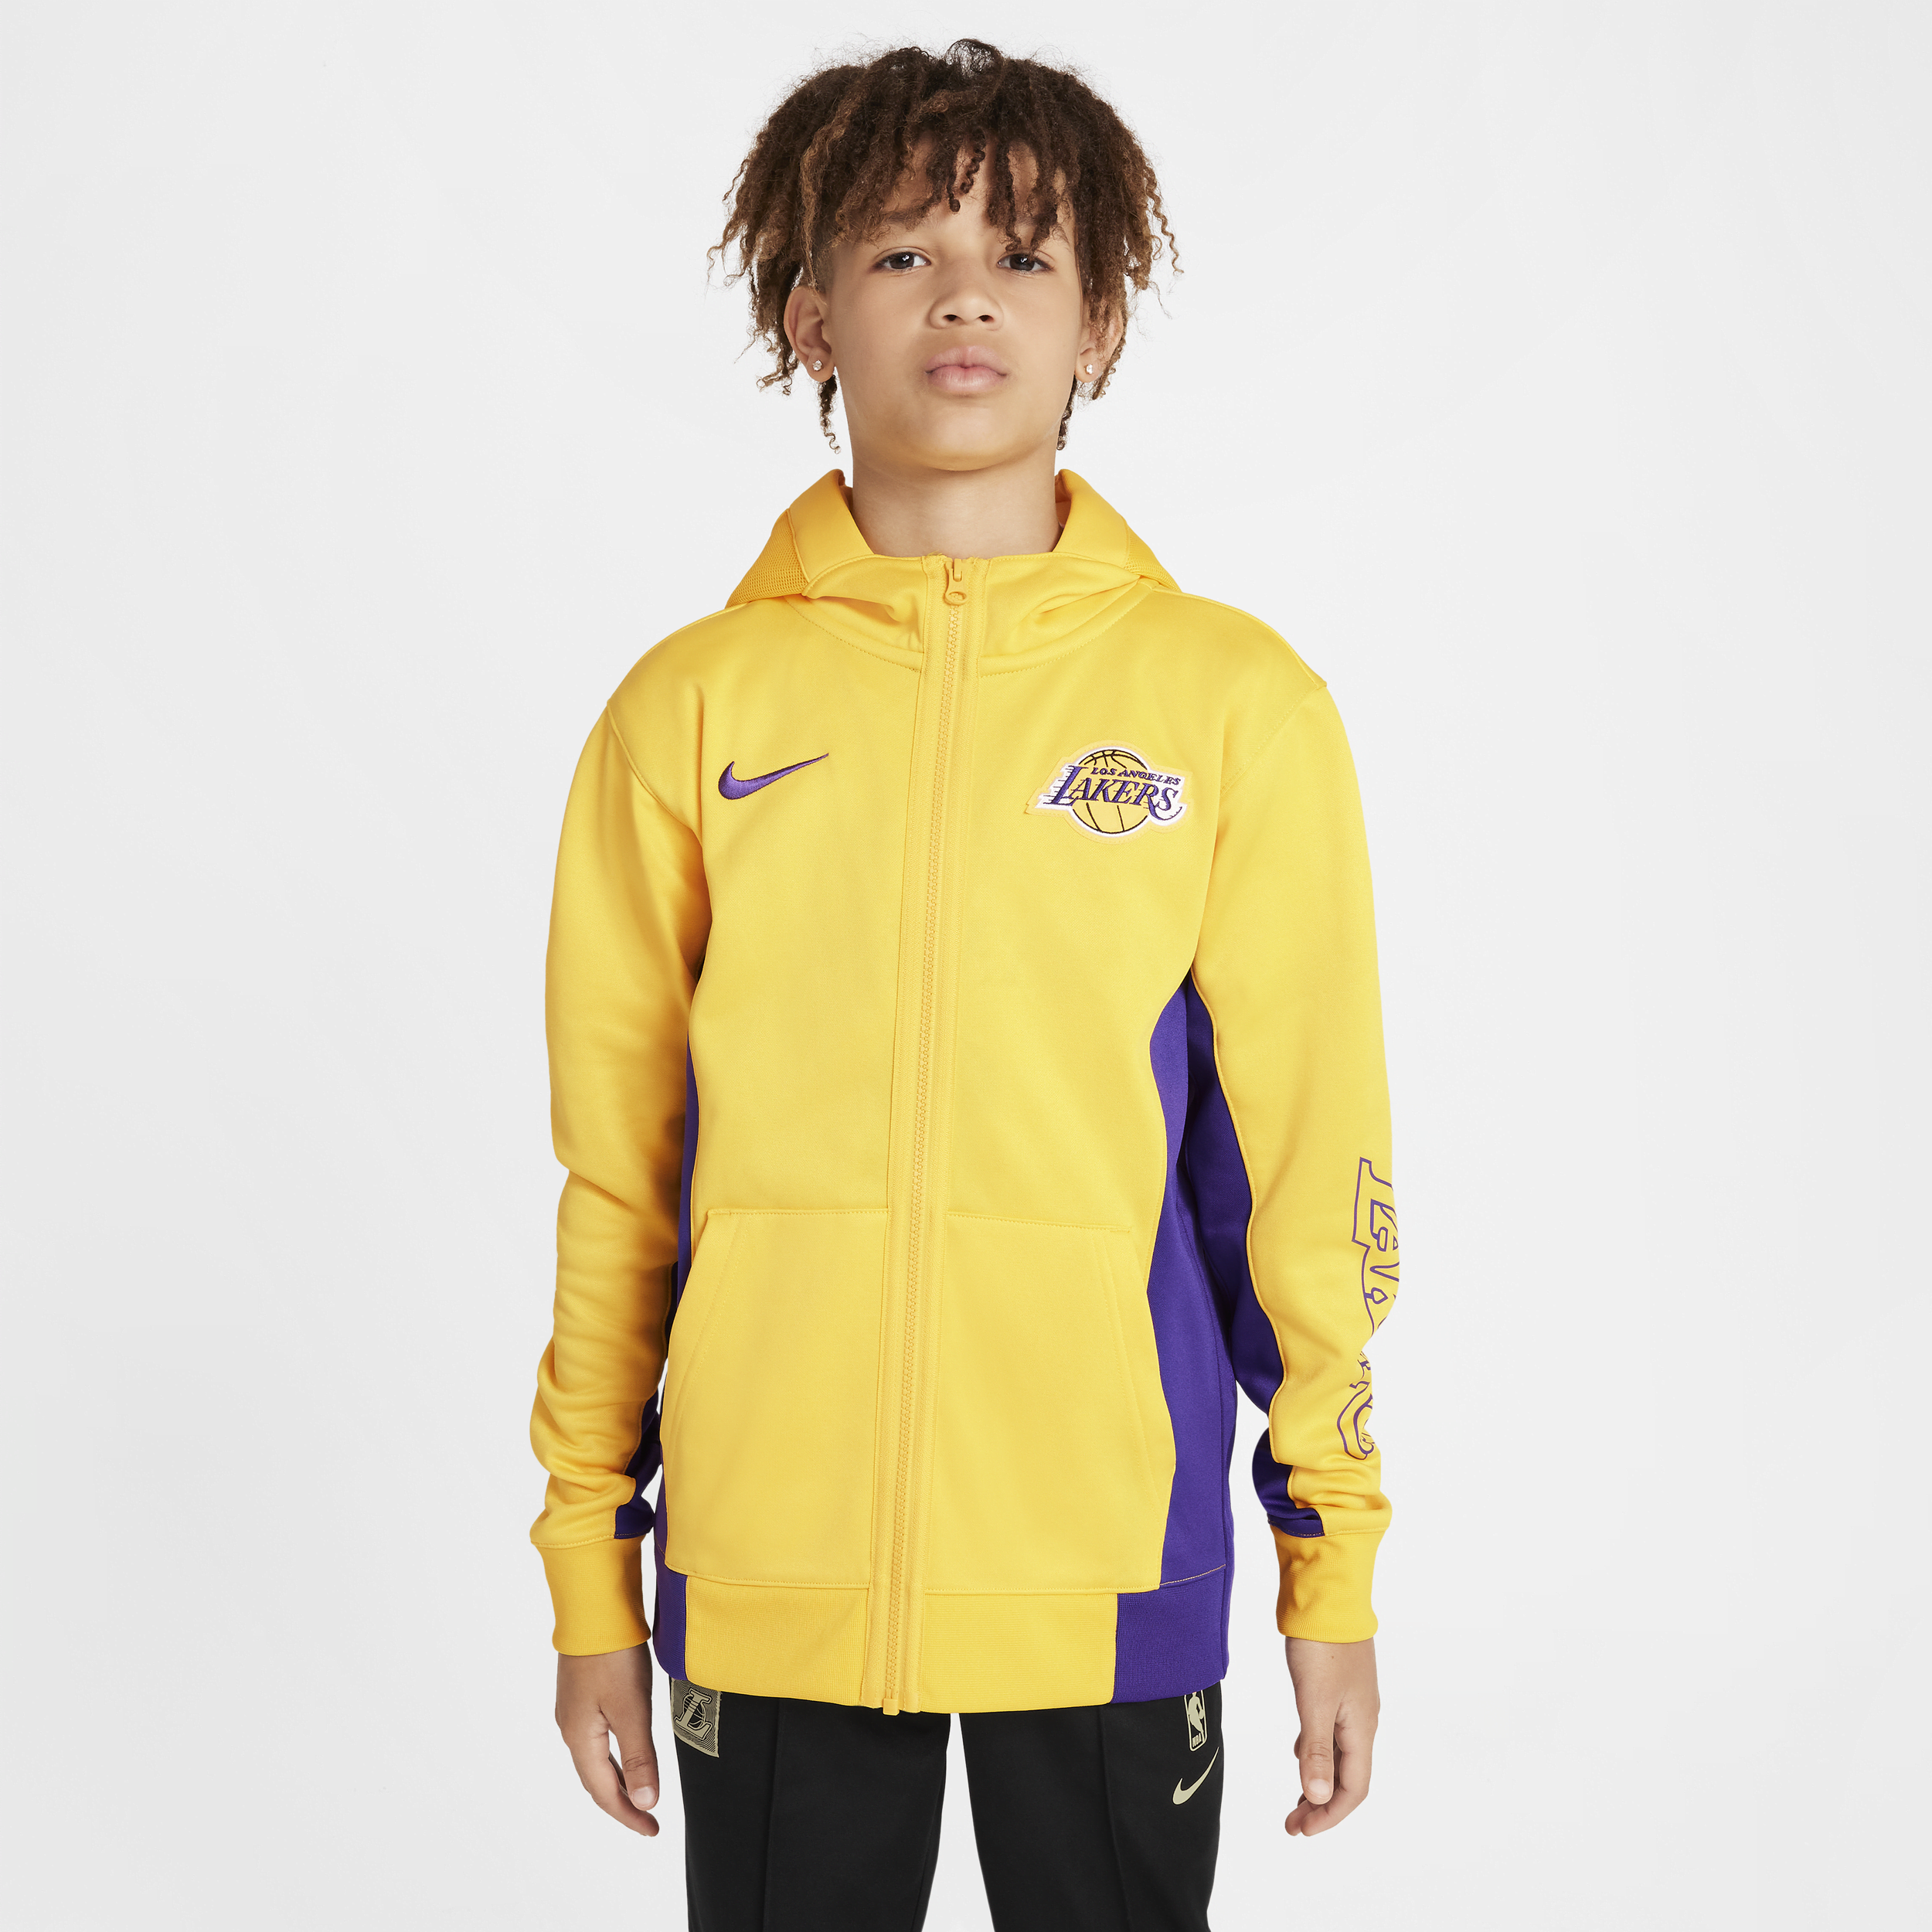 Los Angeles Lakers Showtime Sudadera con capucha y cremallera completa Nike Dri-FIT de la NBA - Niño/a - Amarillo